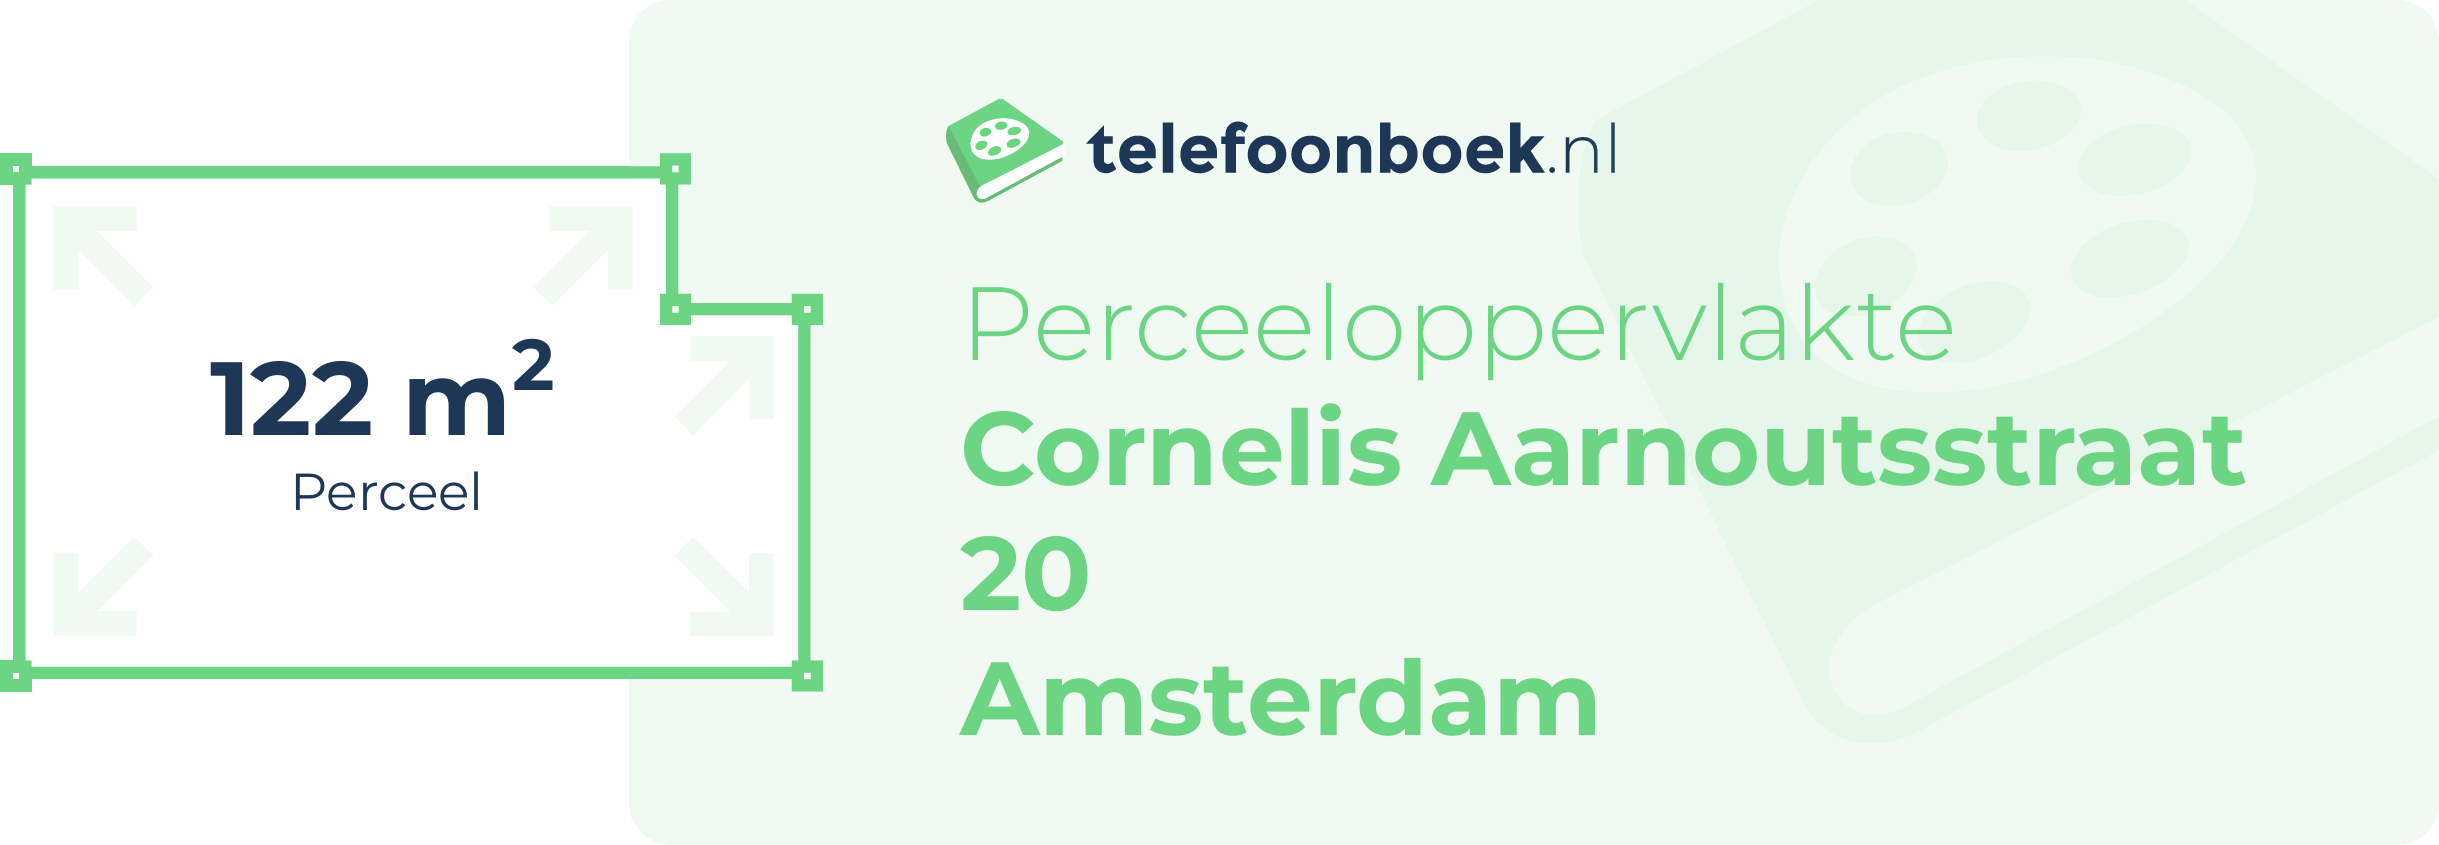 Perceeloppervlakte Cornelis Aarnoutsstraat 20 Amsterdam